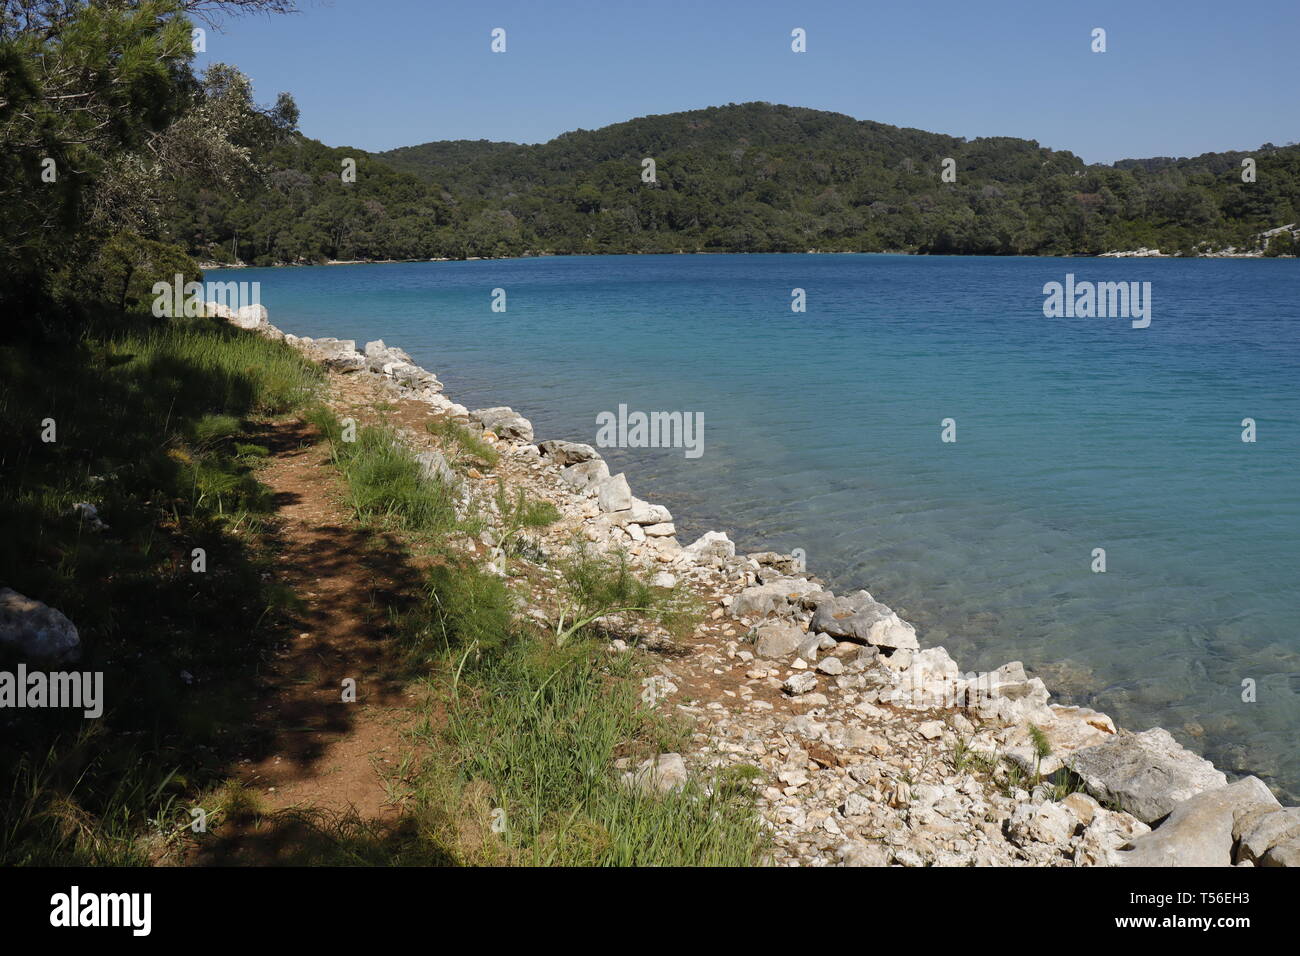 The Small Lake in Mljet National Park, Mljet island, Croatia Stock Photo